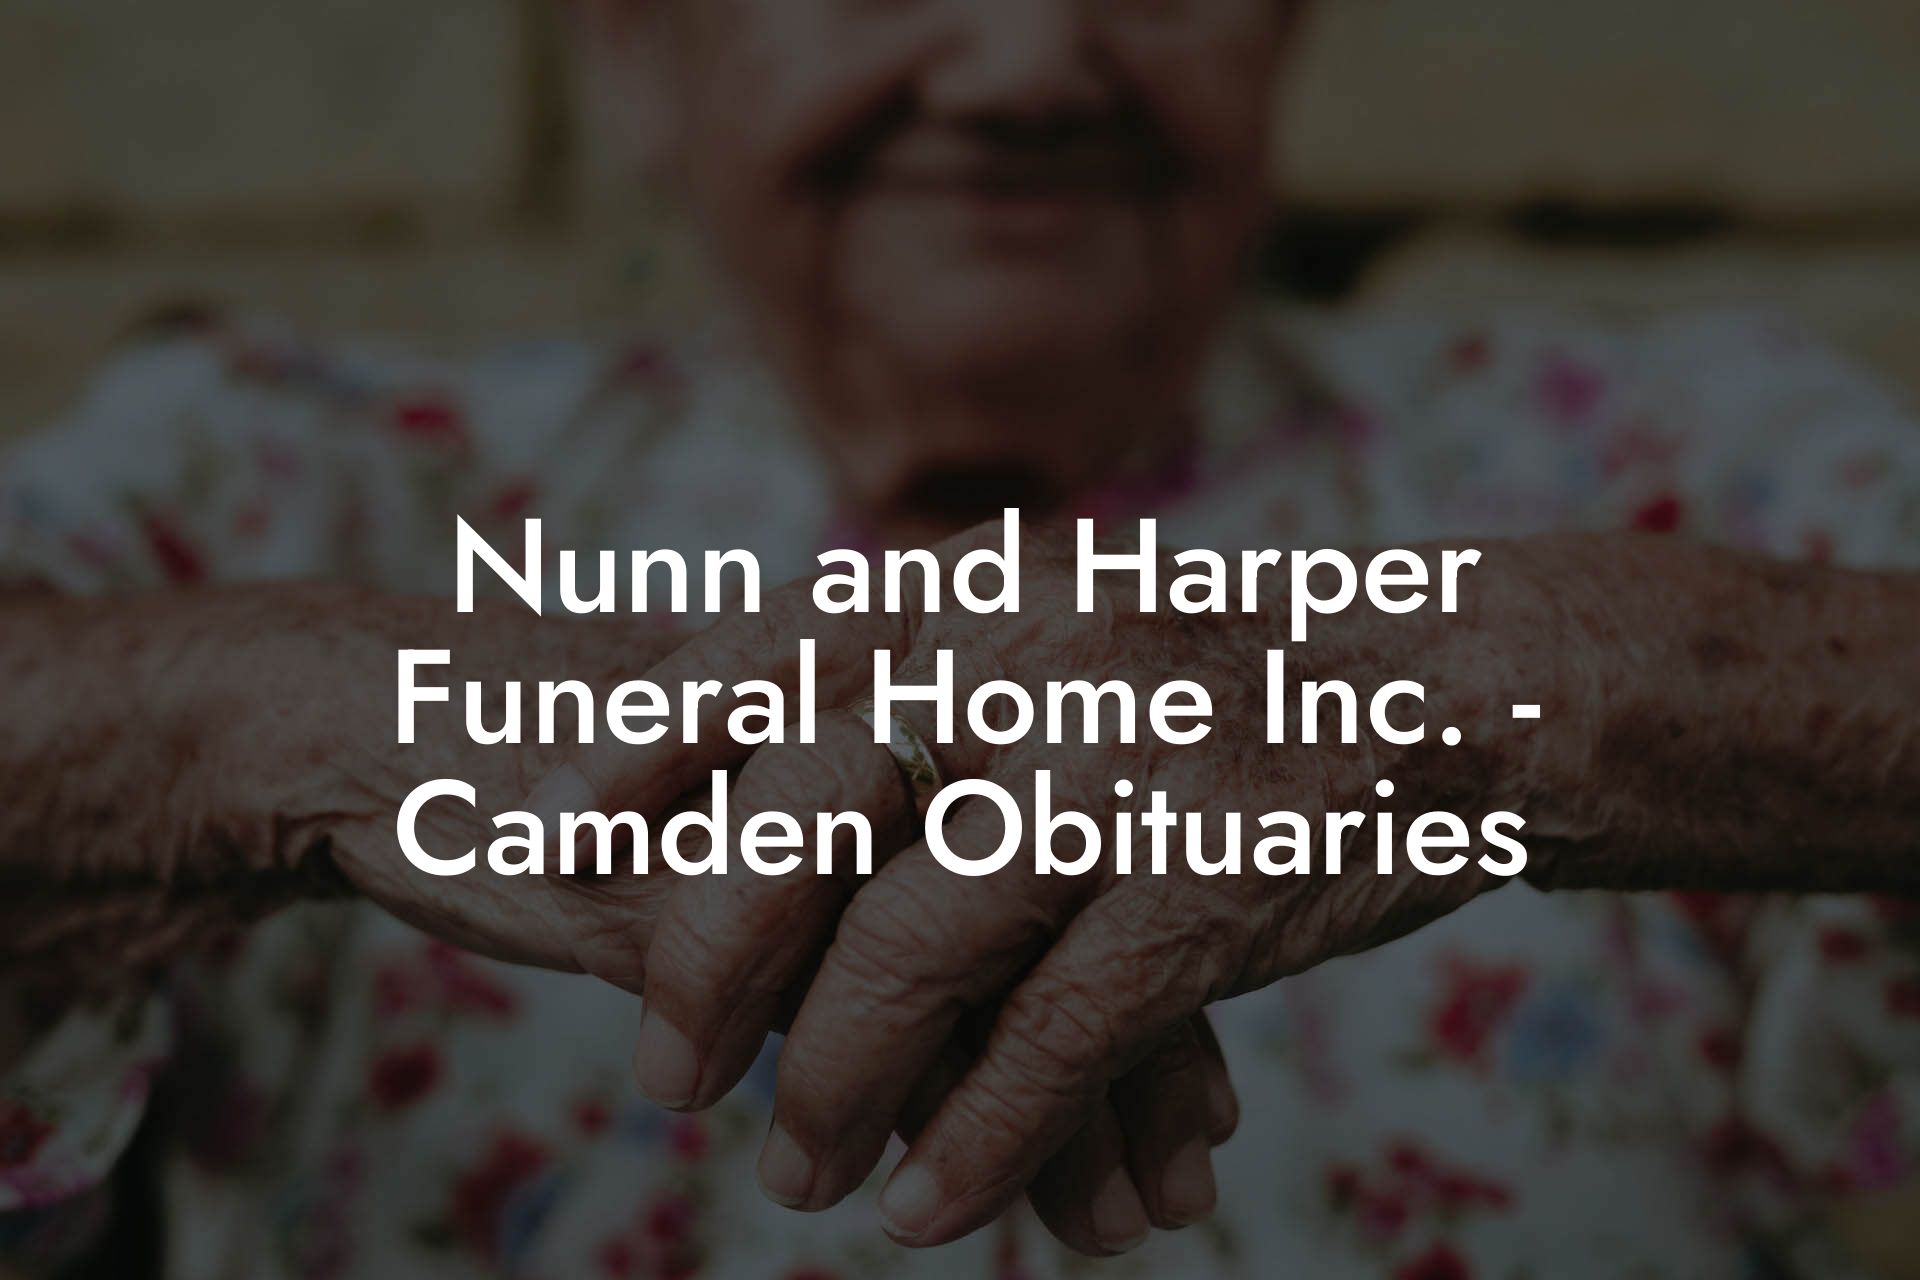 Nunn and Harper Funeral Home Inc. - Camden Obituaries